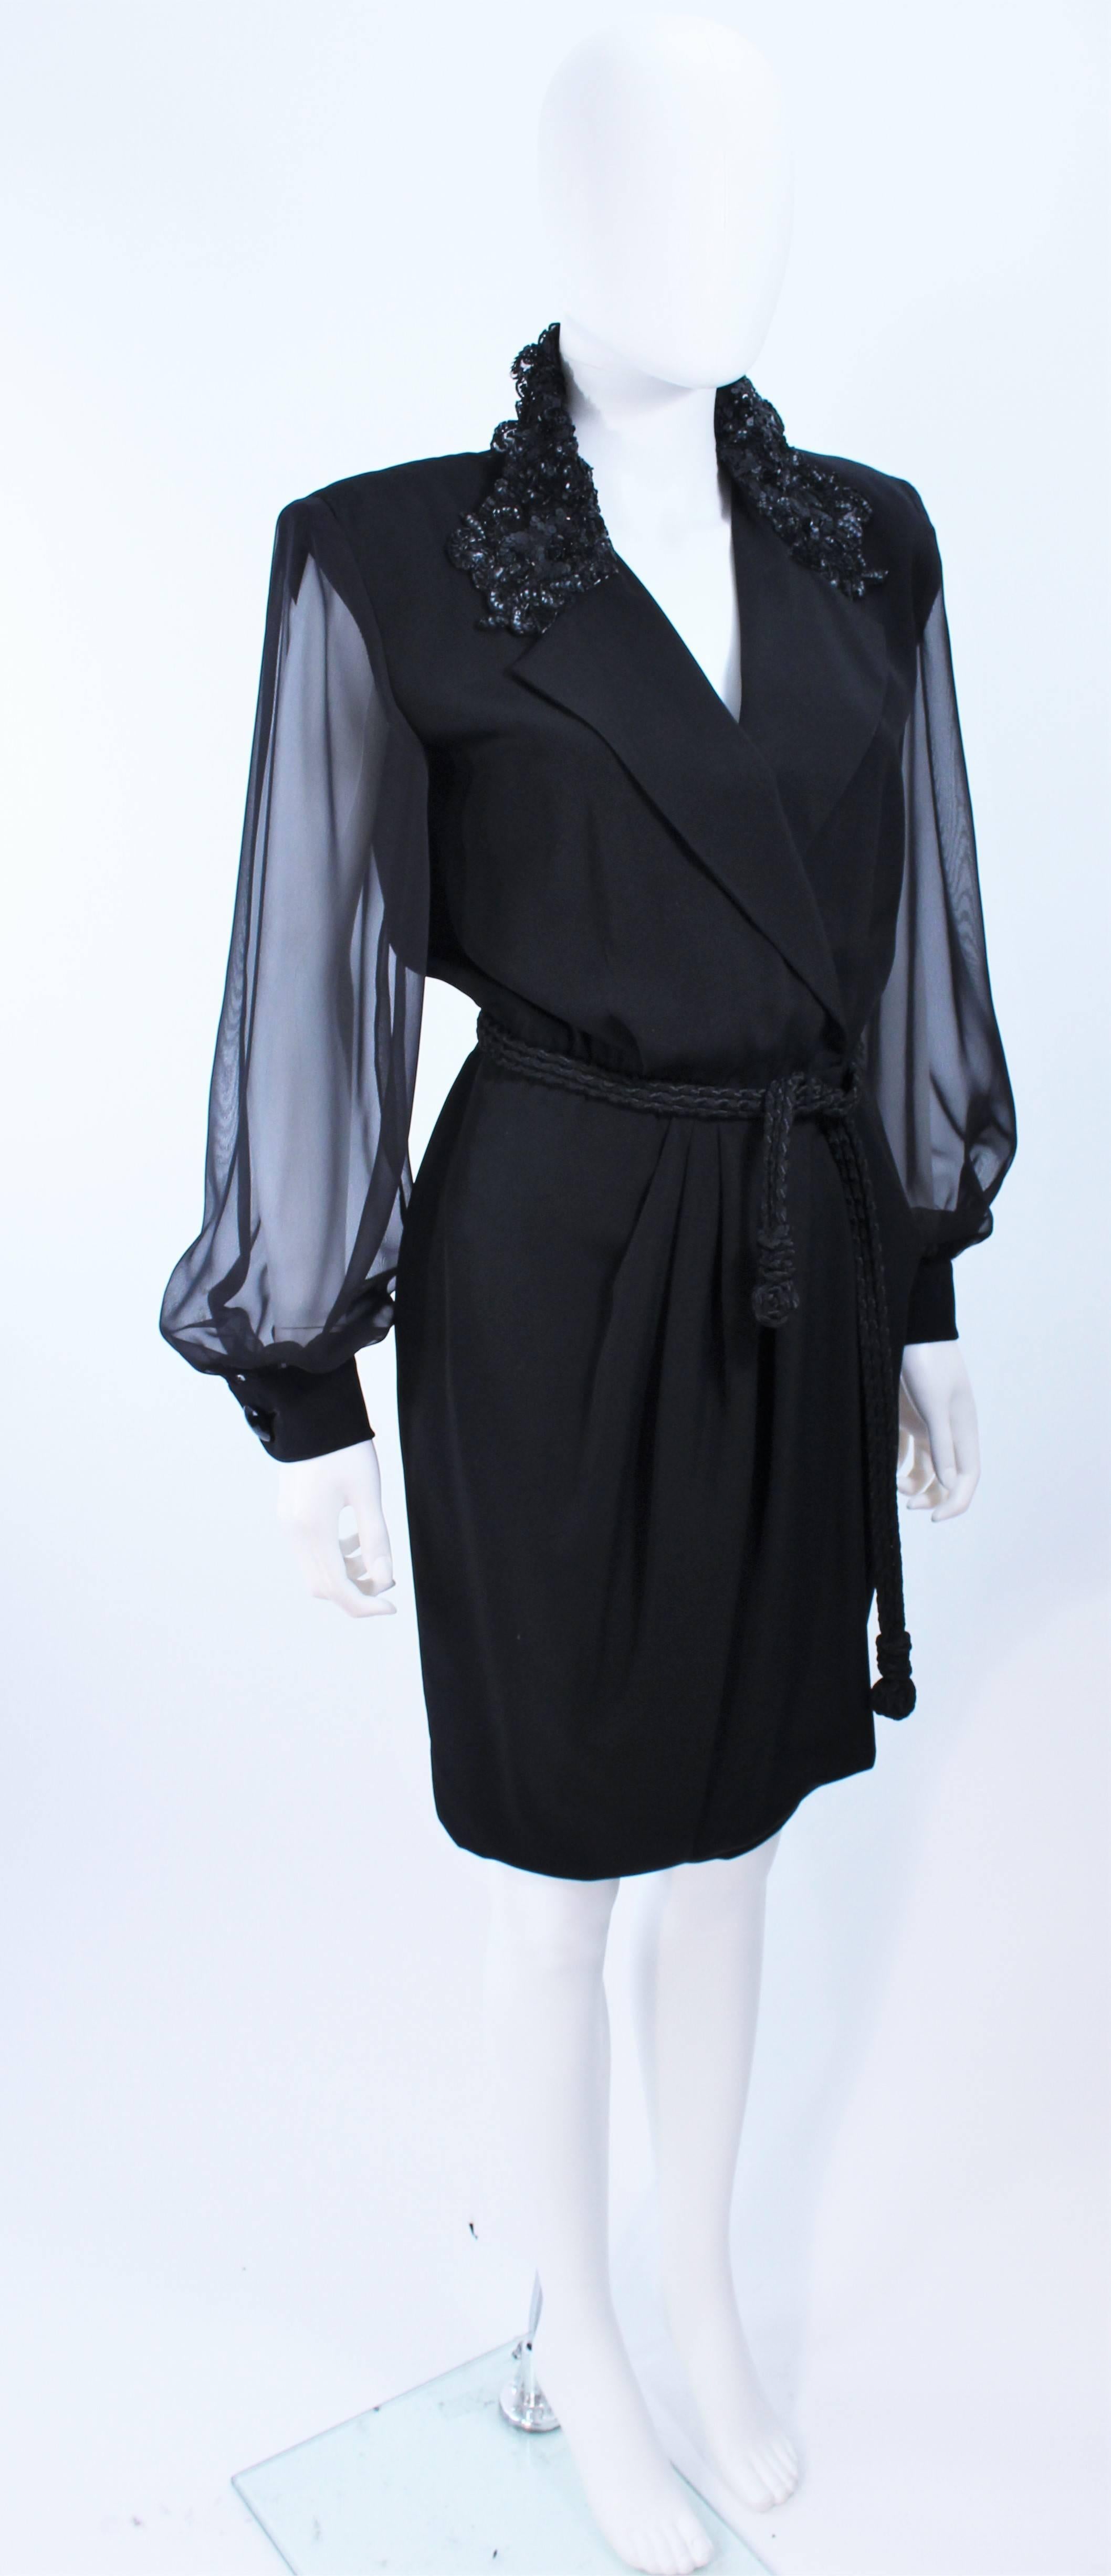 LIAN CARLO Black Sequin Chiffon Sheer Sleeve Cocktail Dress Size 8 For Sale 1